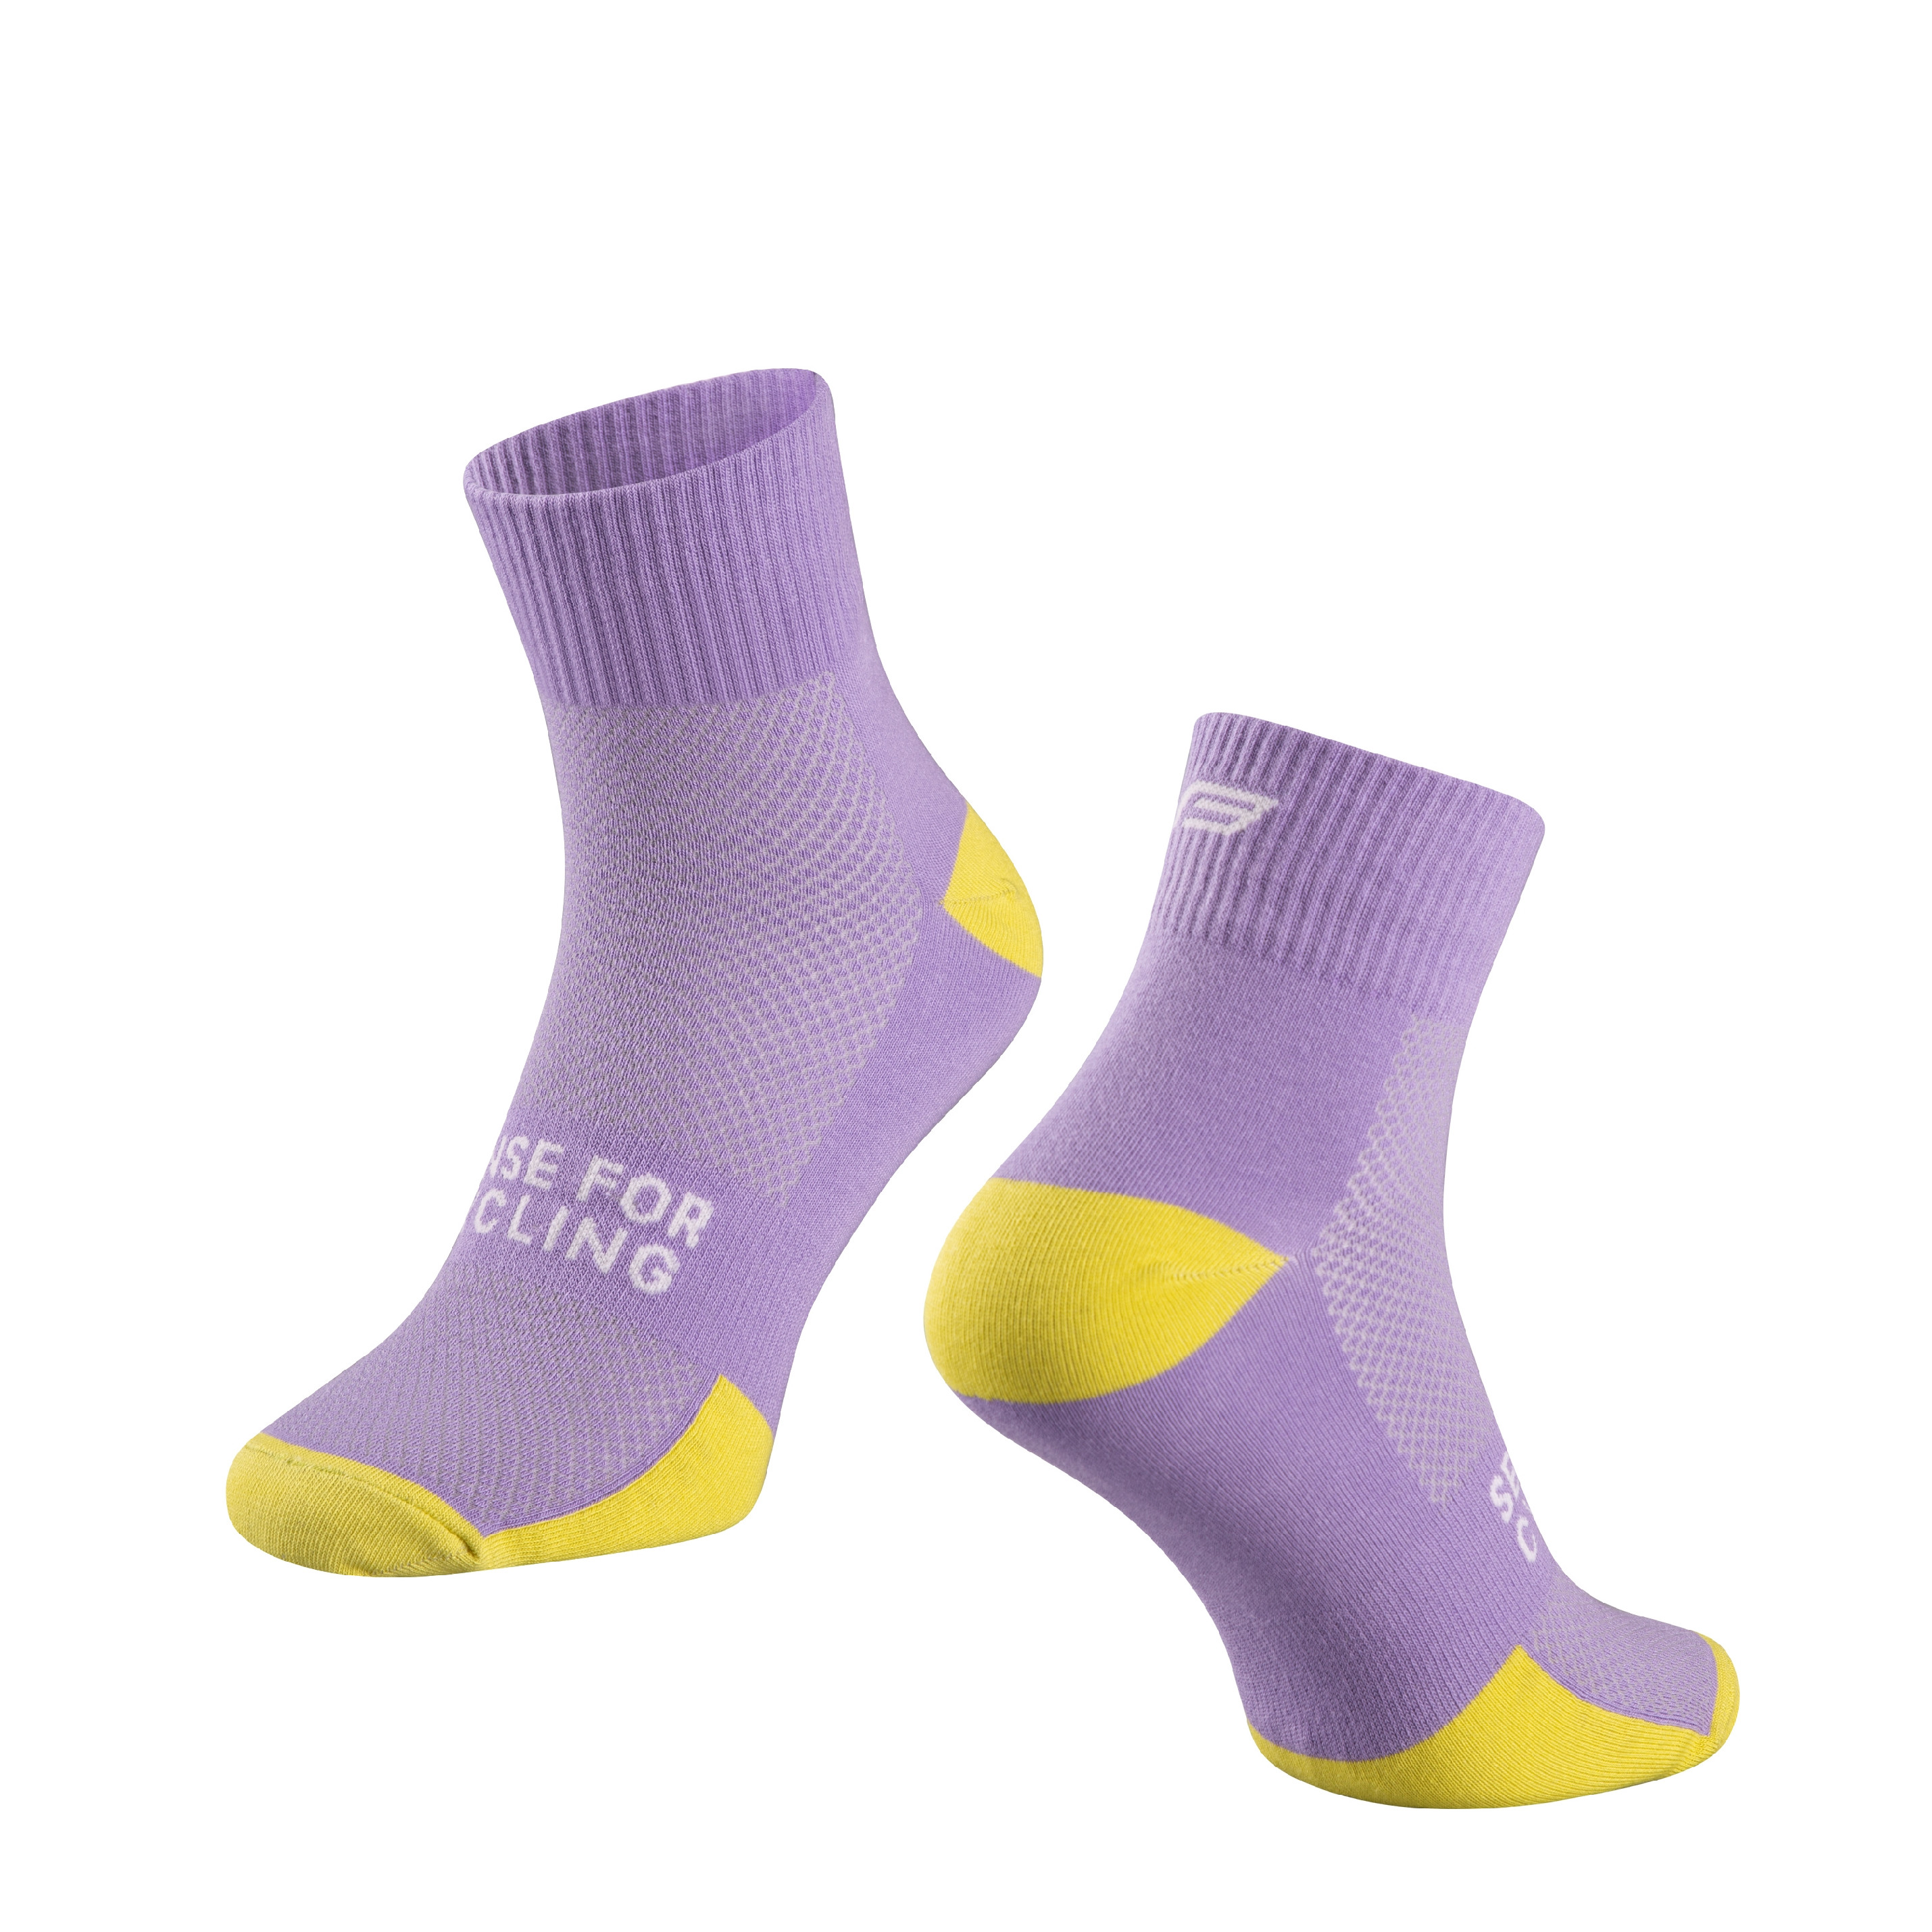 ponožky FORCE EDGE, fialovo-fluo L-XL/42-46 Velikost: S-M